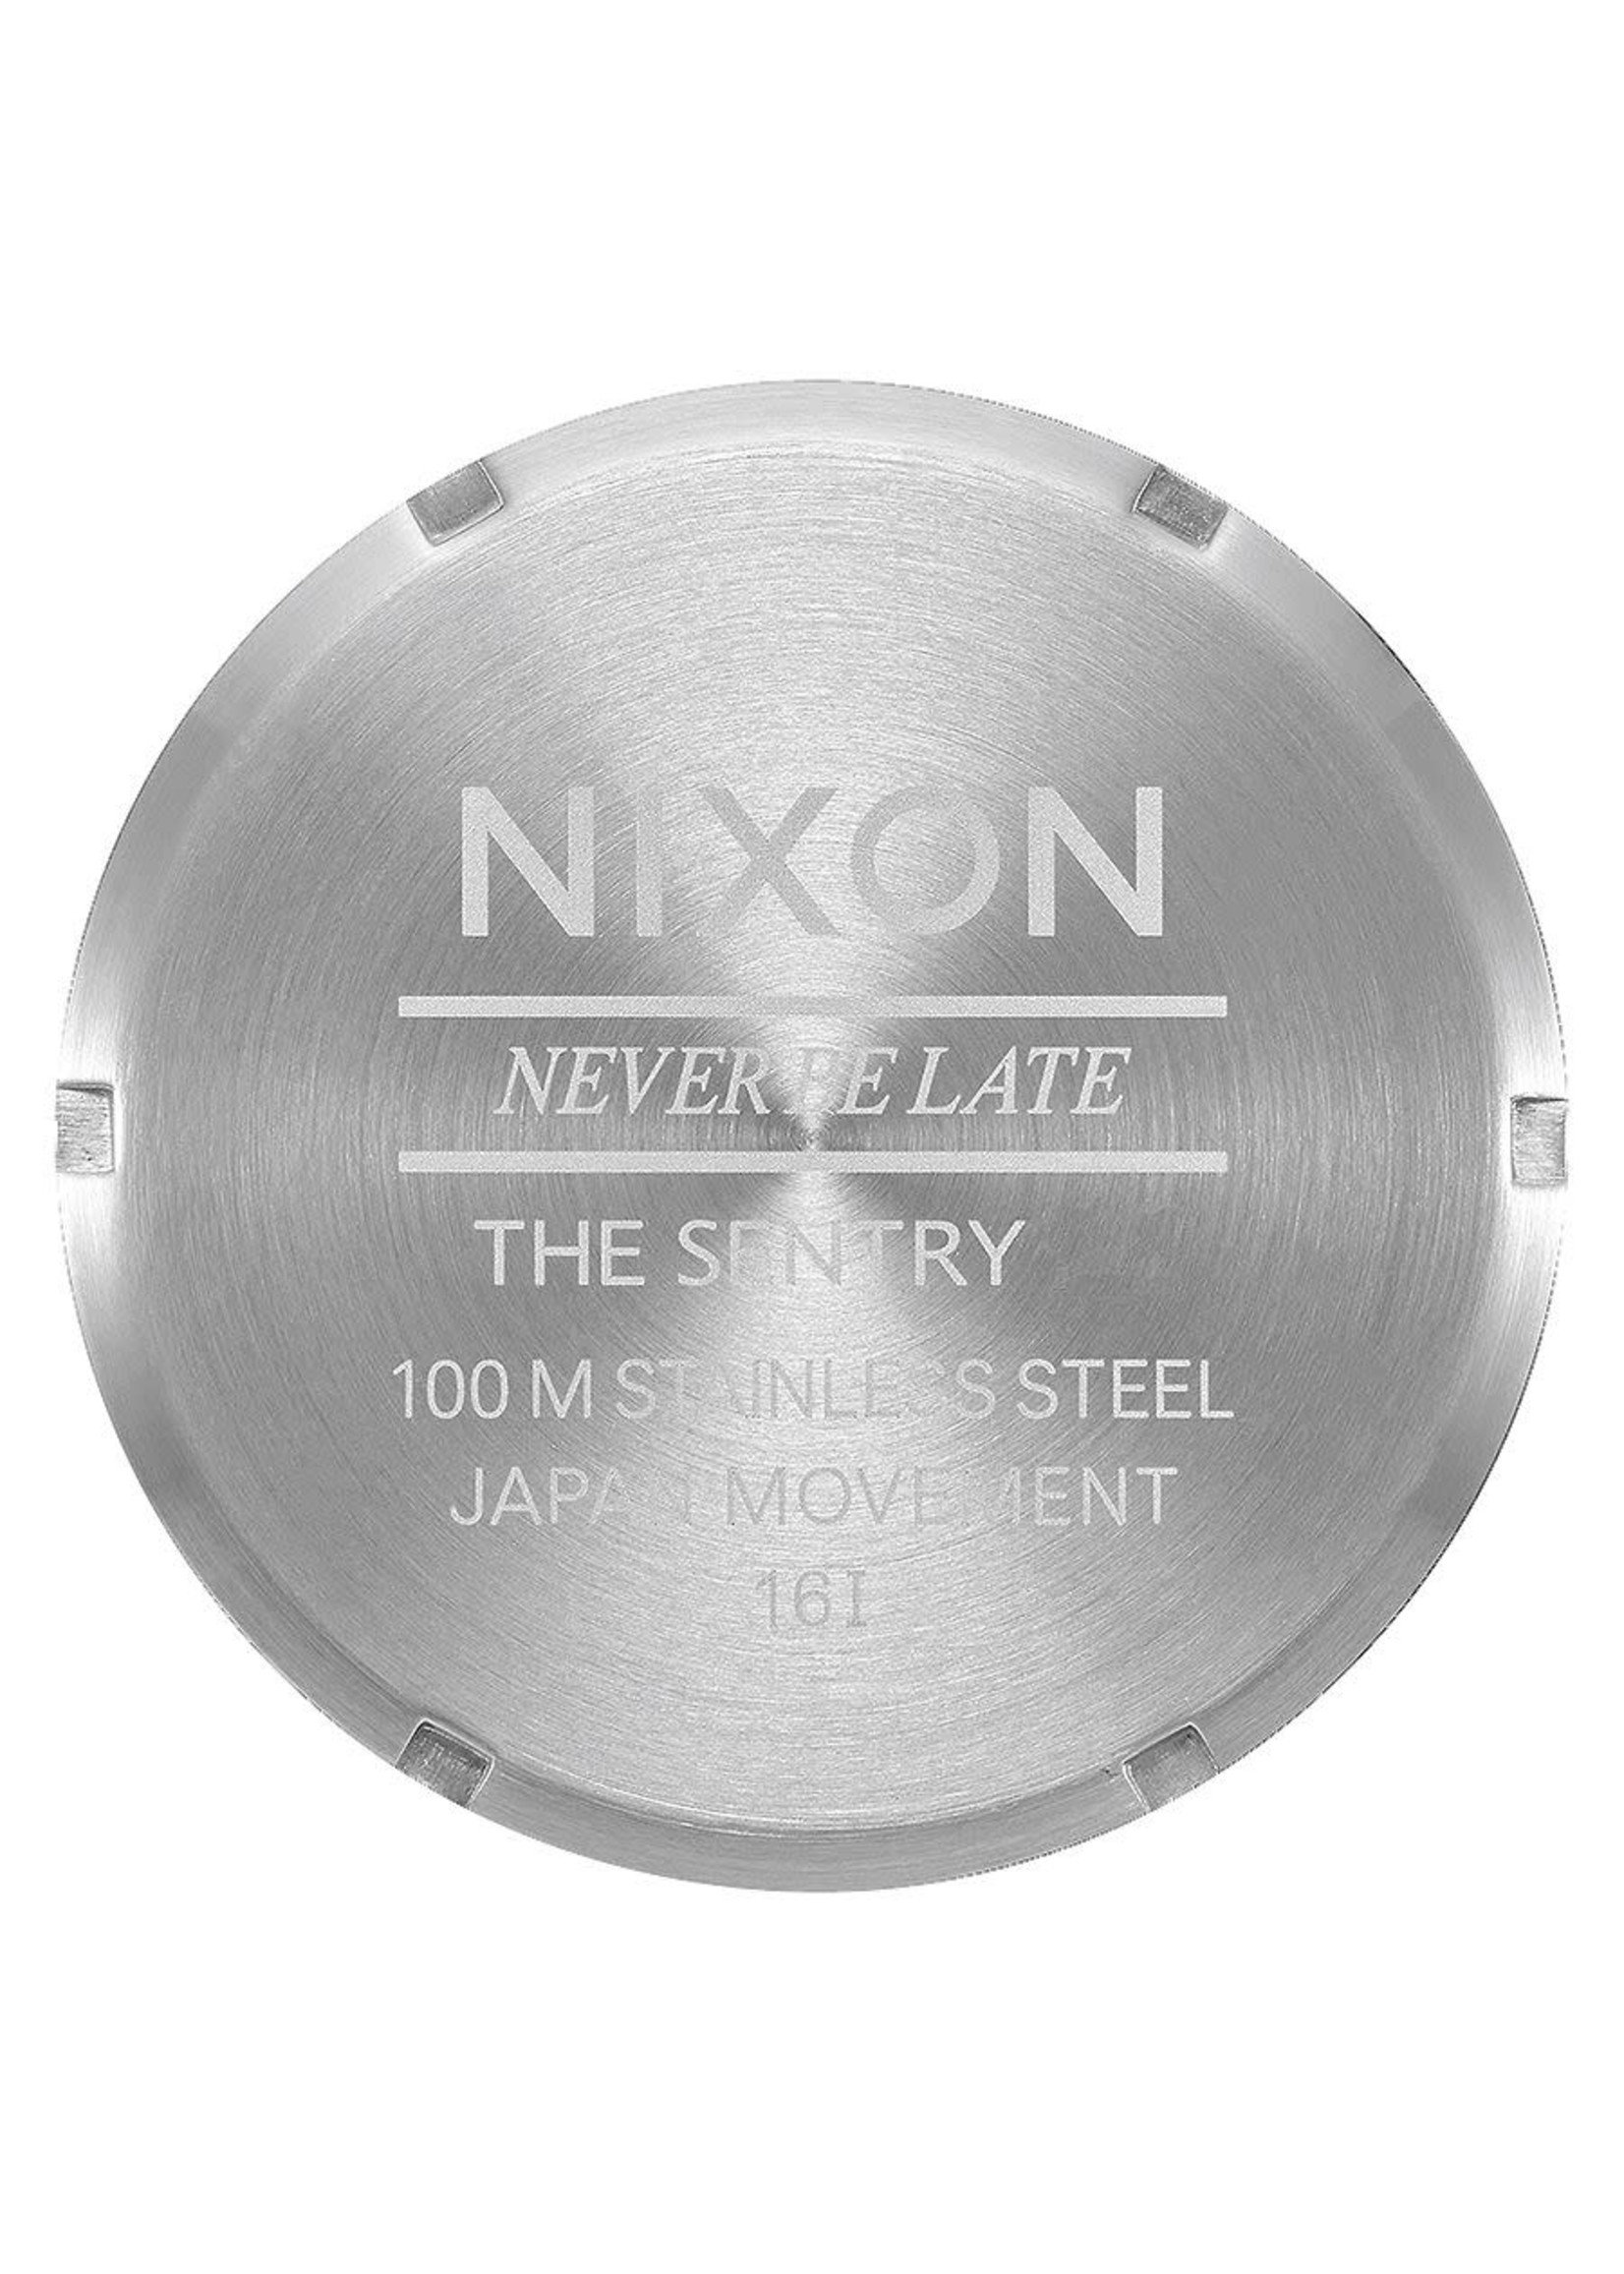 NIXON Sentry Leather Watch, Silver/ Black